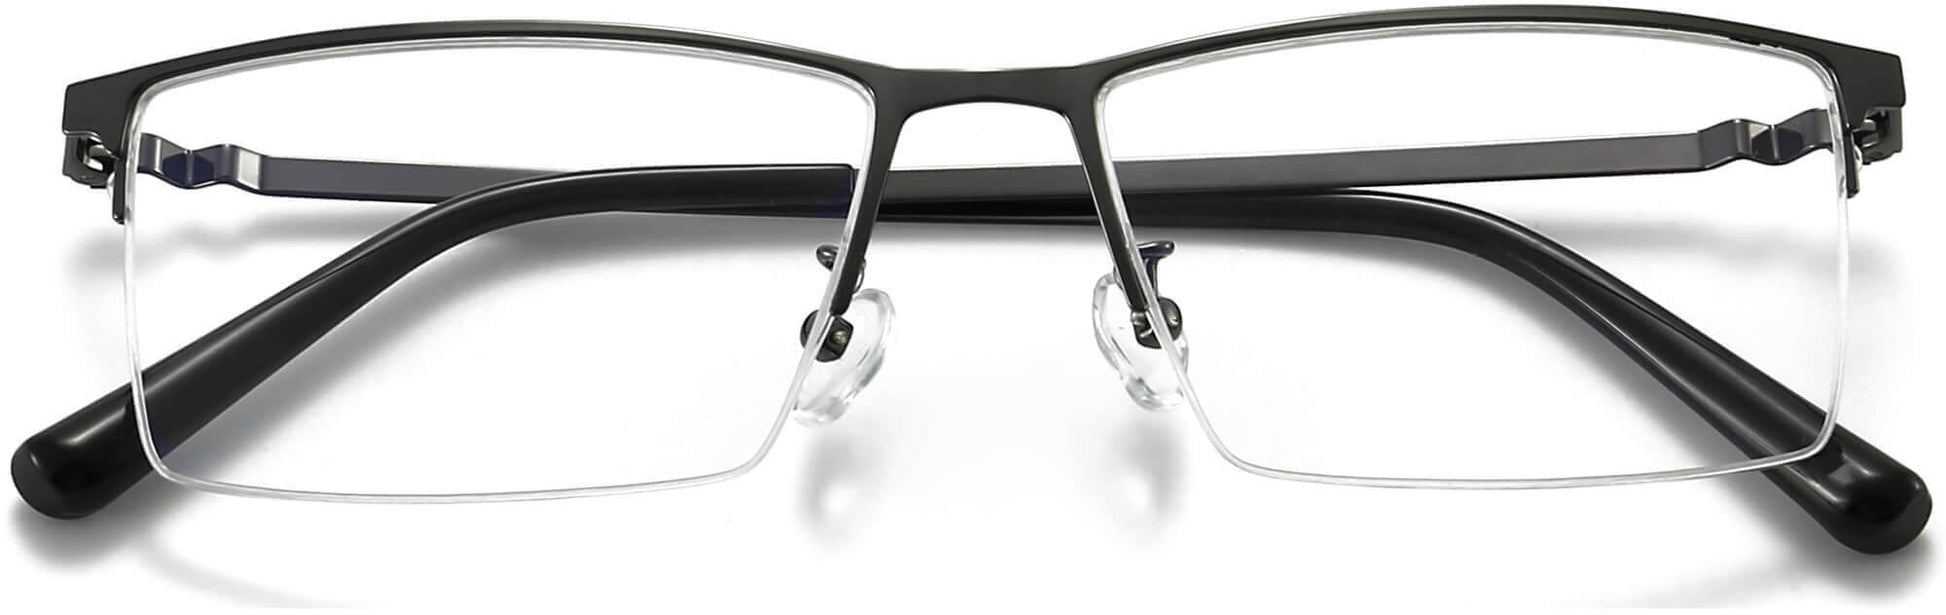 Ingemar Rectangle Black Eyeglasses from ANRRI, closed view